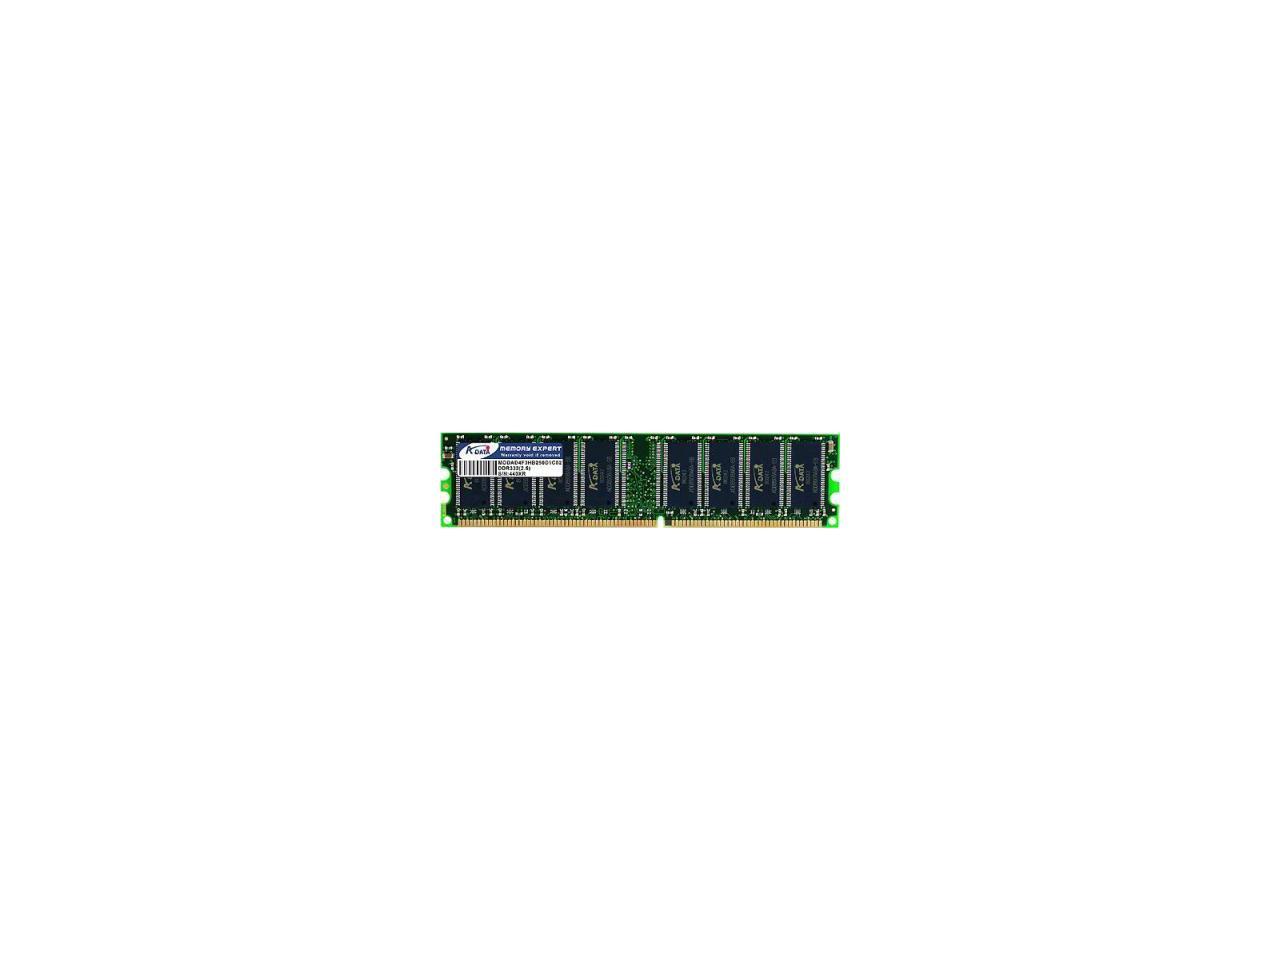 ADATA 1GB A-Data PC2700 DDR RAM CL2.5 module Model AD1U333A1G25-B